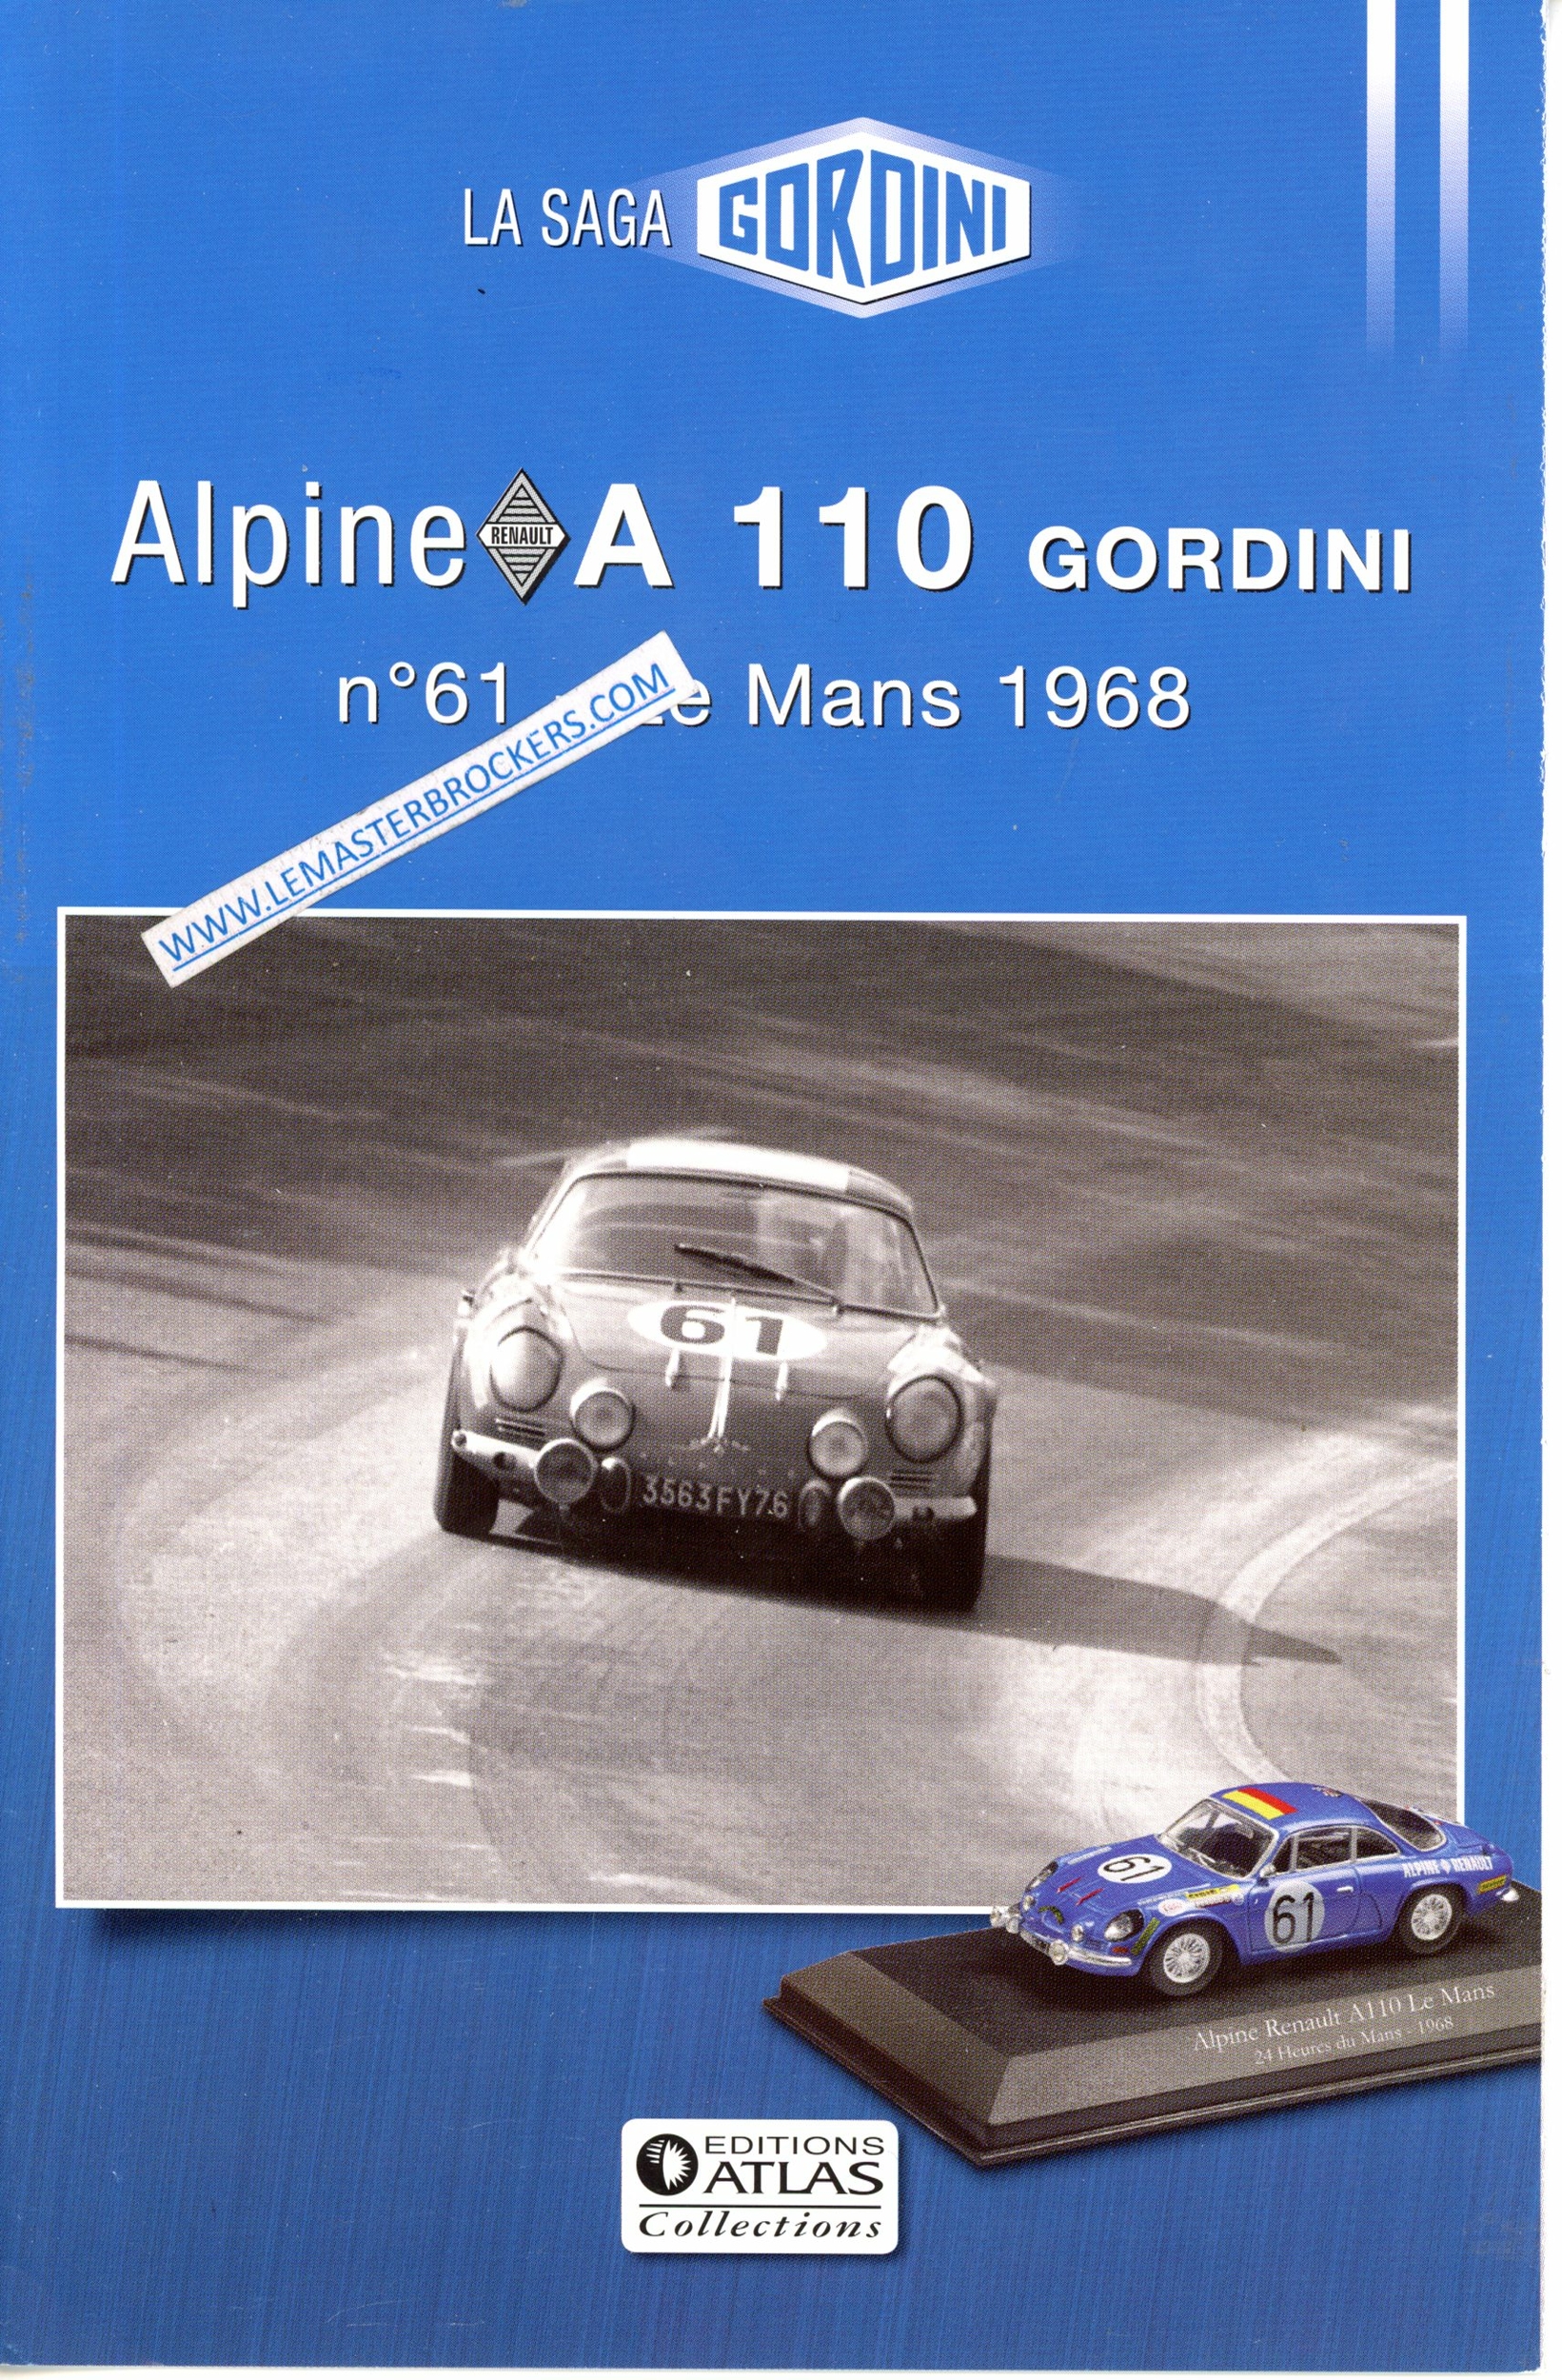 BROCHURE SAGA GORDINI ALPINE A110 GORDINI N61 LE MANS 1968